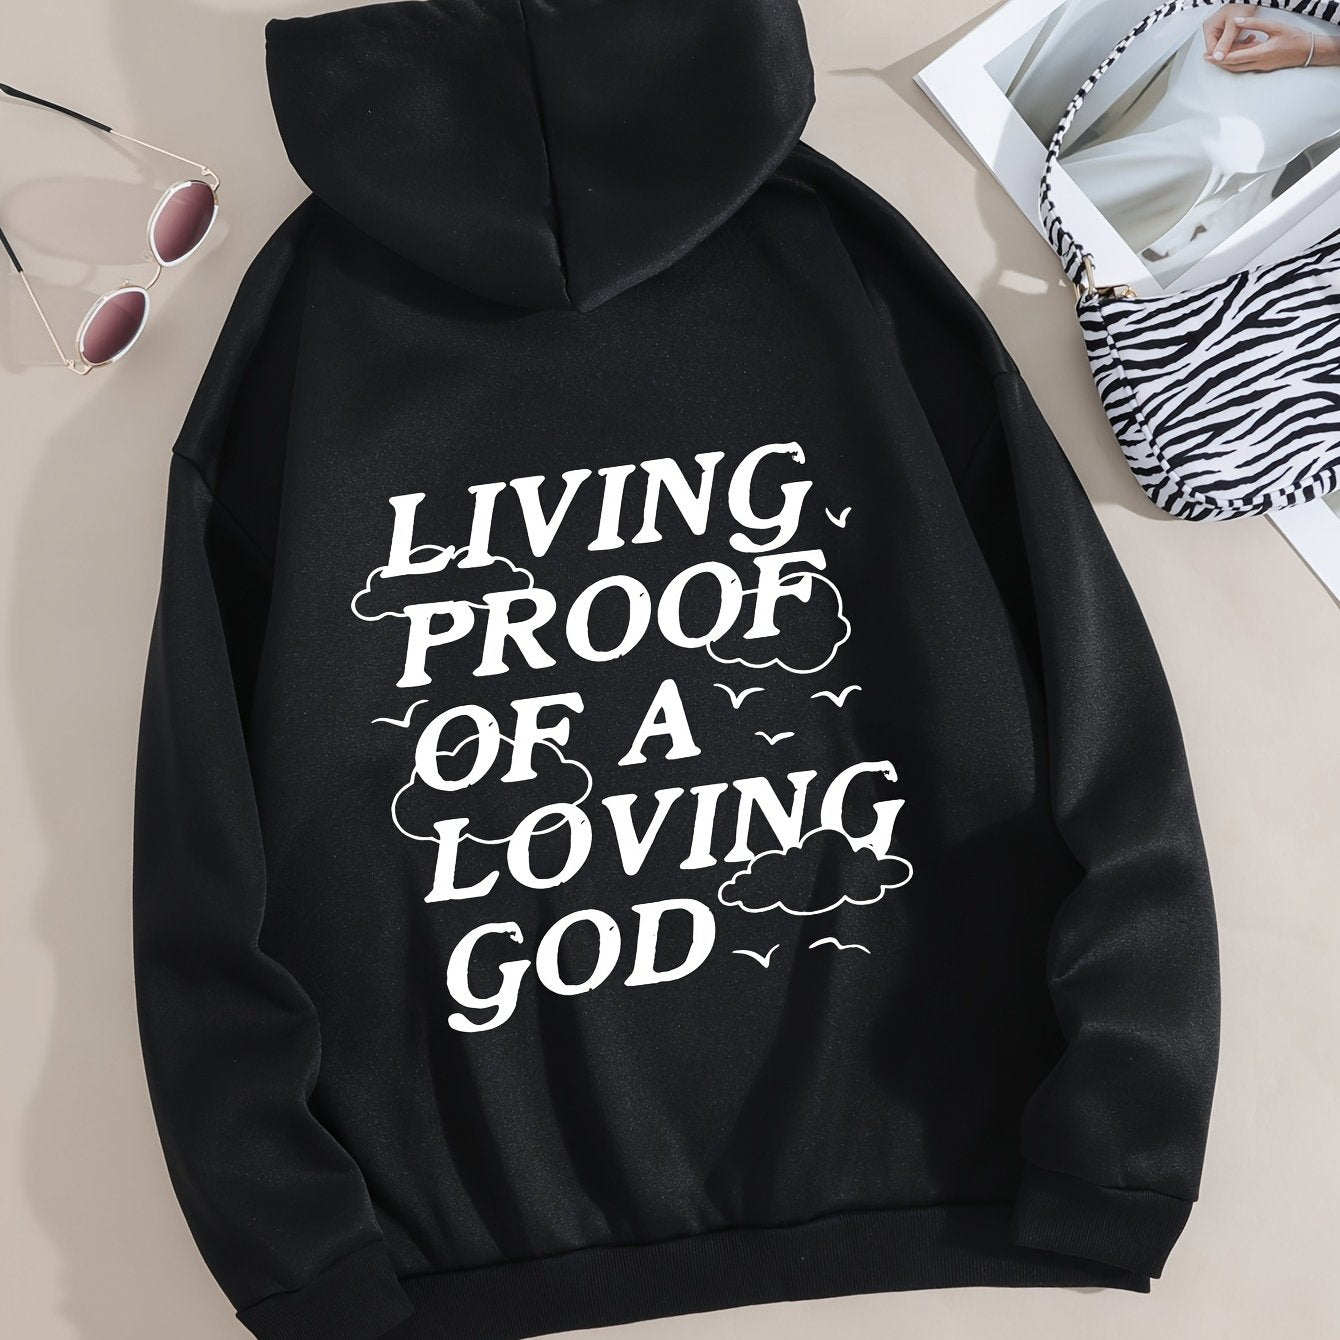 Living Proof Of A Loving God Plus Size Women's Christian Pullover Hooded Sweatshirt claimedbygoddesigns